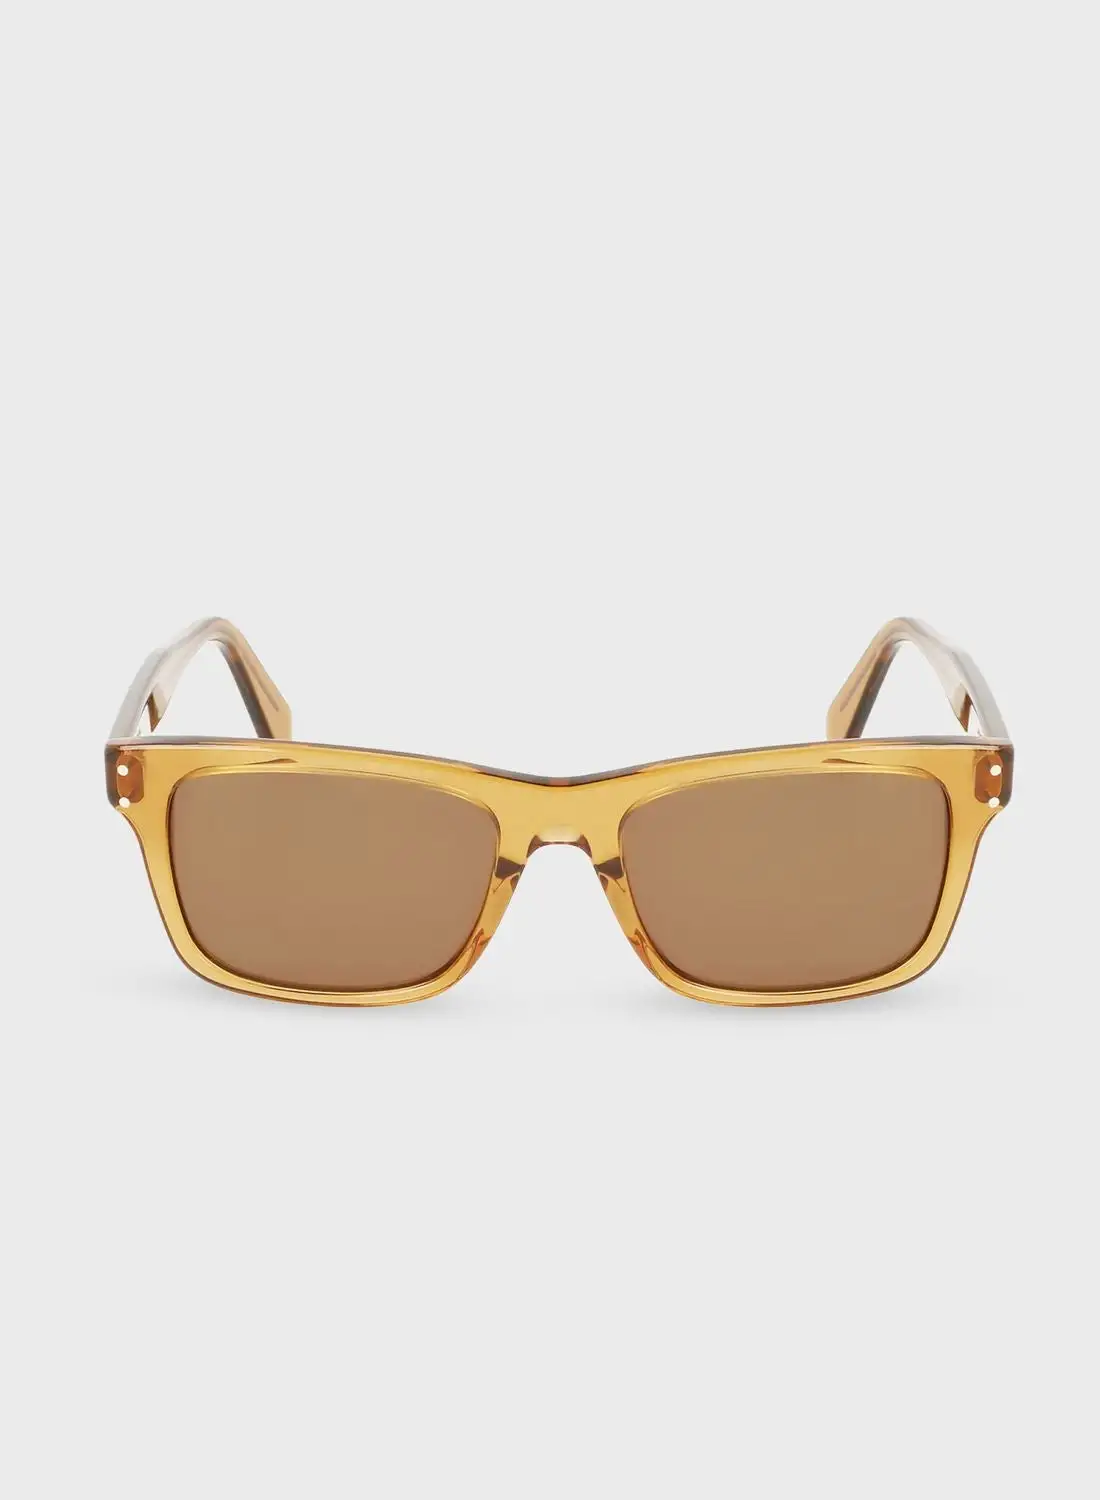 Salvatore Ferragamo Sf1039S-261 Wayfarers Sunglasses